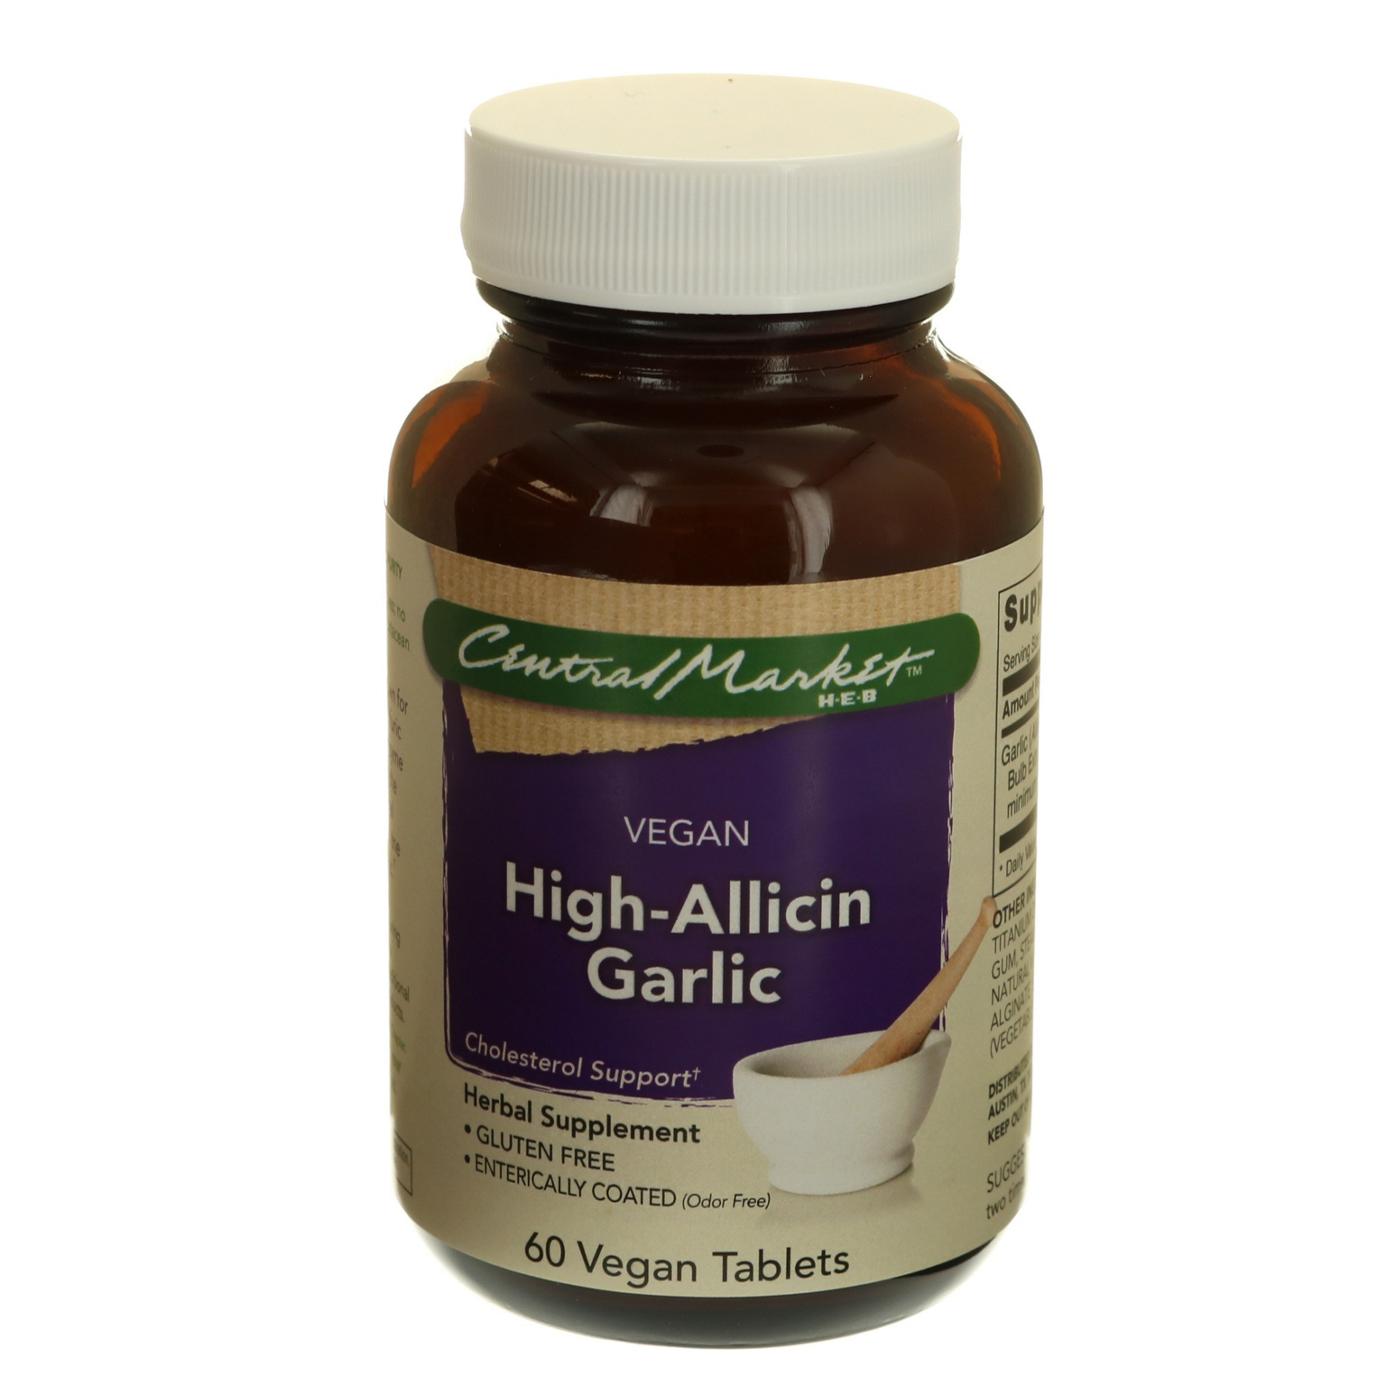 Central Market Vegan High-Allicin Garlic 500 mg Vegan Tablets; image 1 of 2